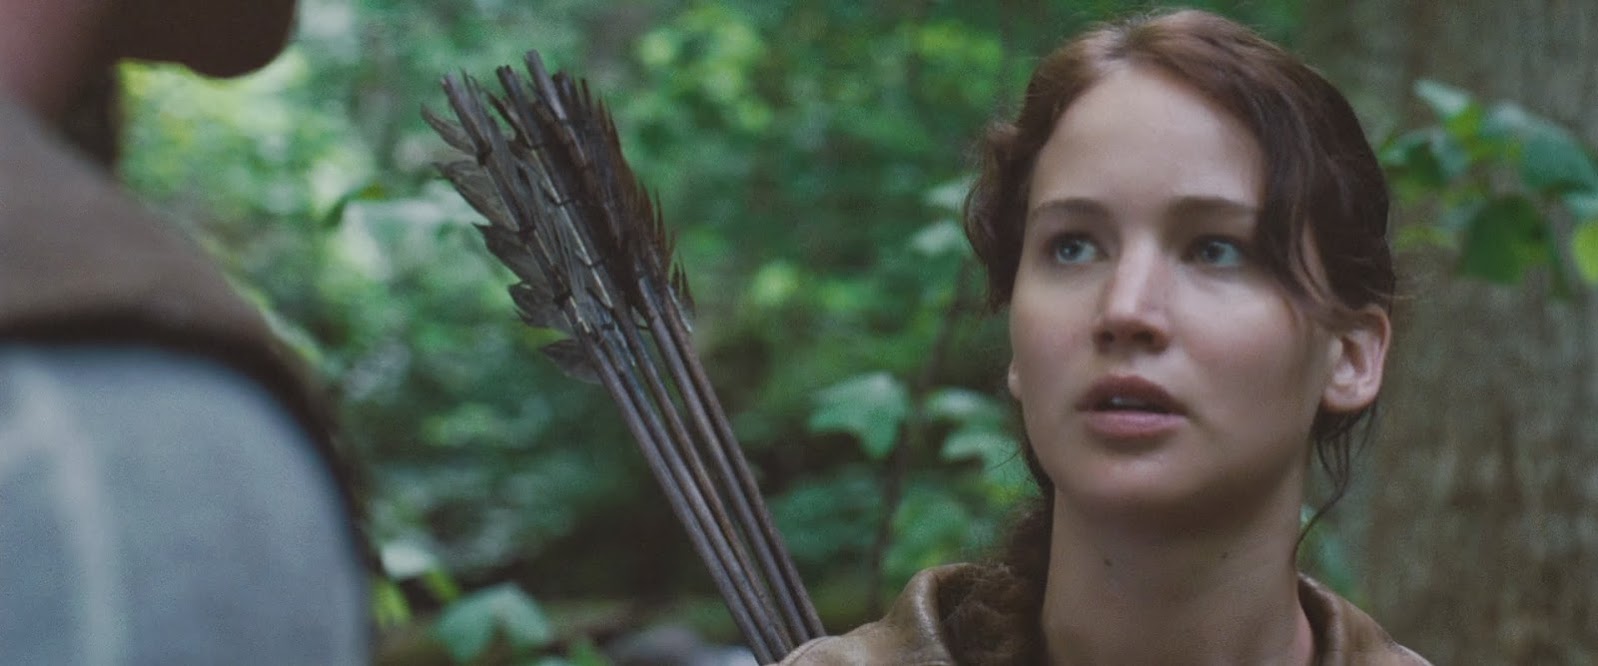 Katniss in The Hunger Games movie - Katniss-Everdeen-in-The-Hunger-Games-katniss-everdeen-33096598-1920-800